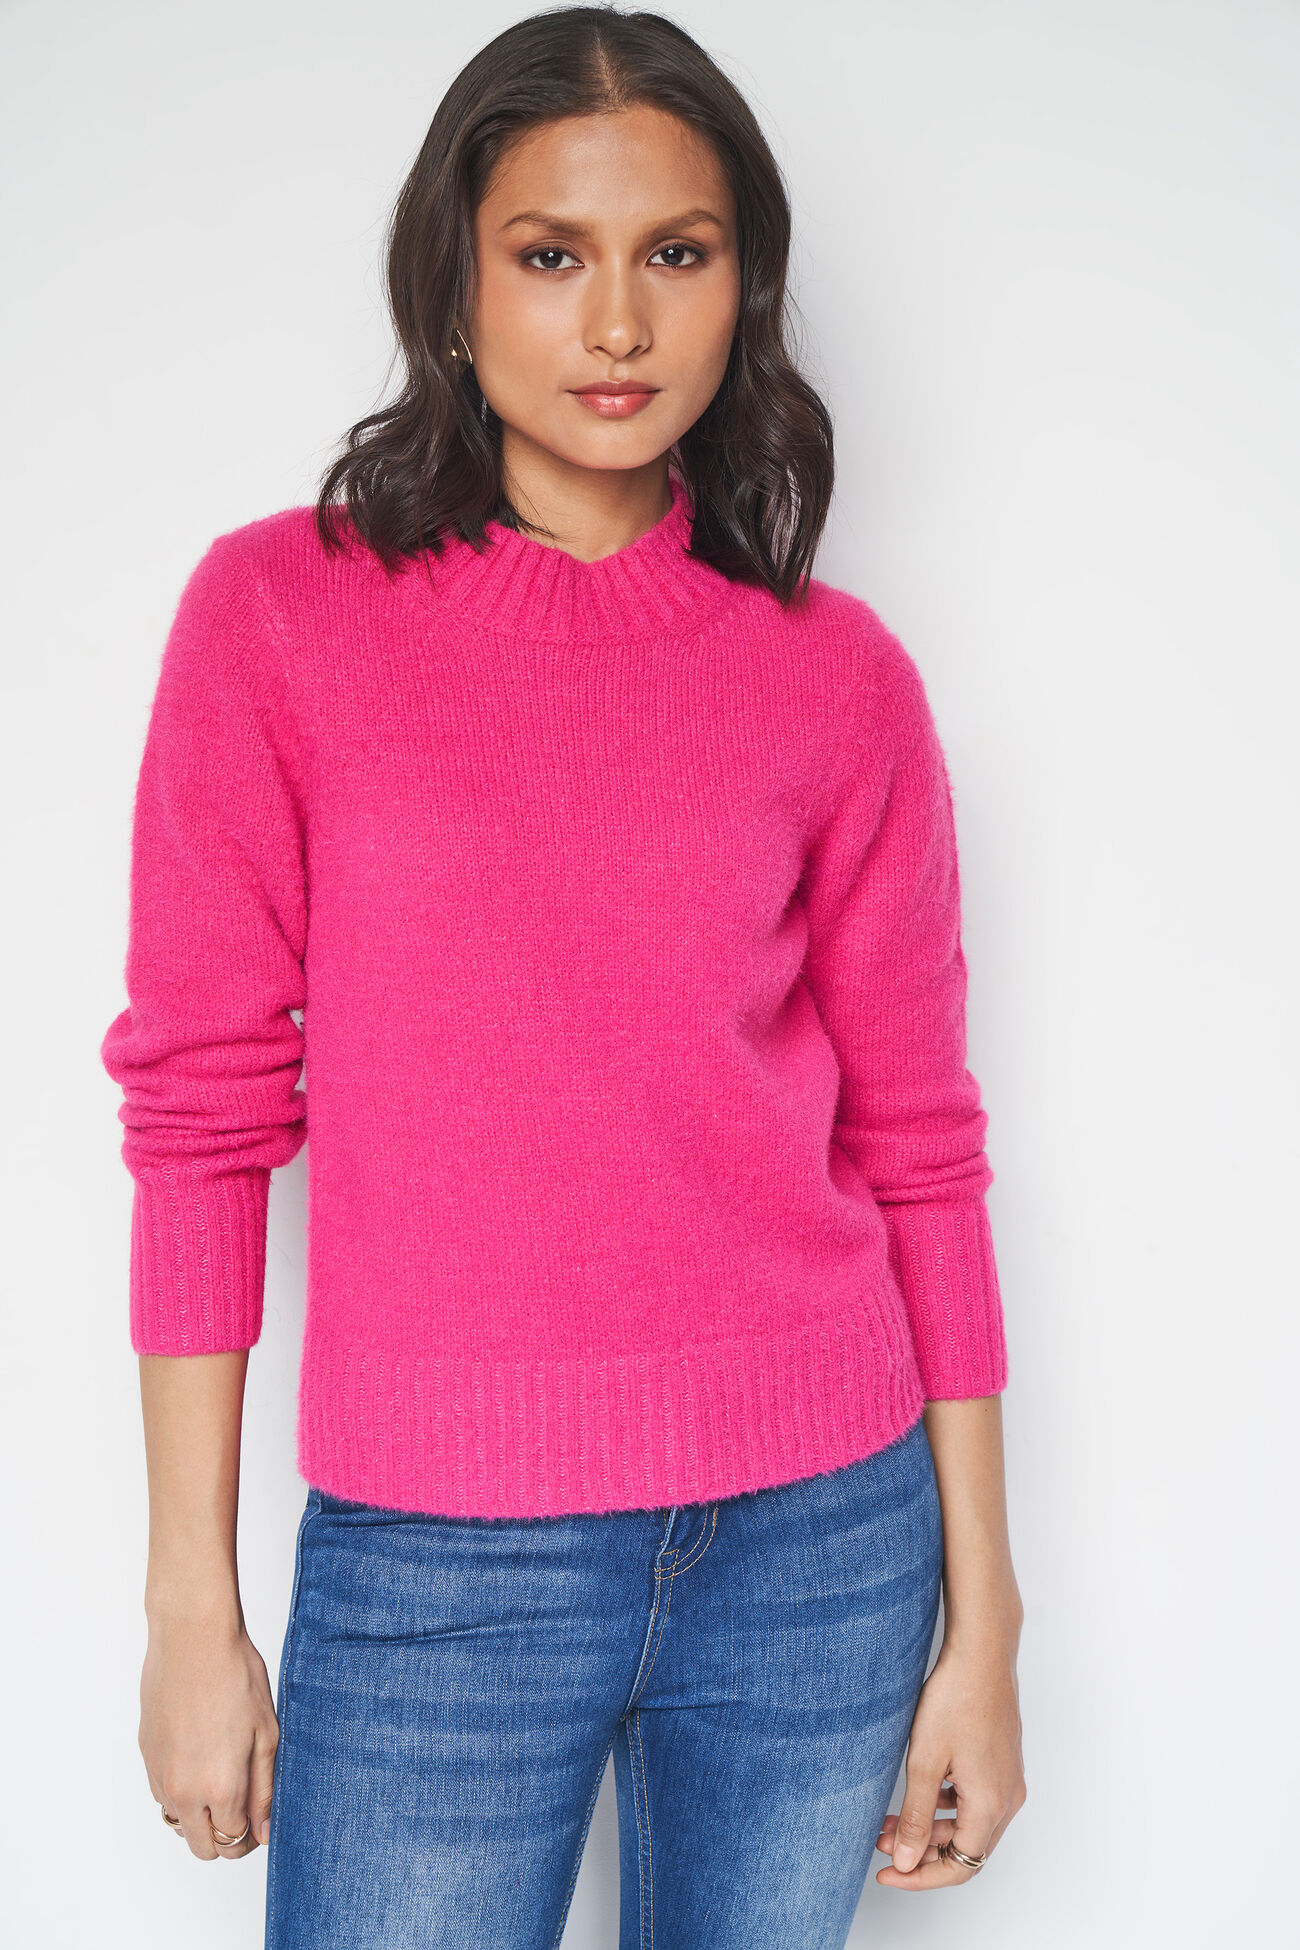 Cherry Blossom Sweater, Pink, image 1